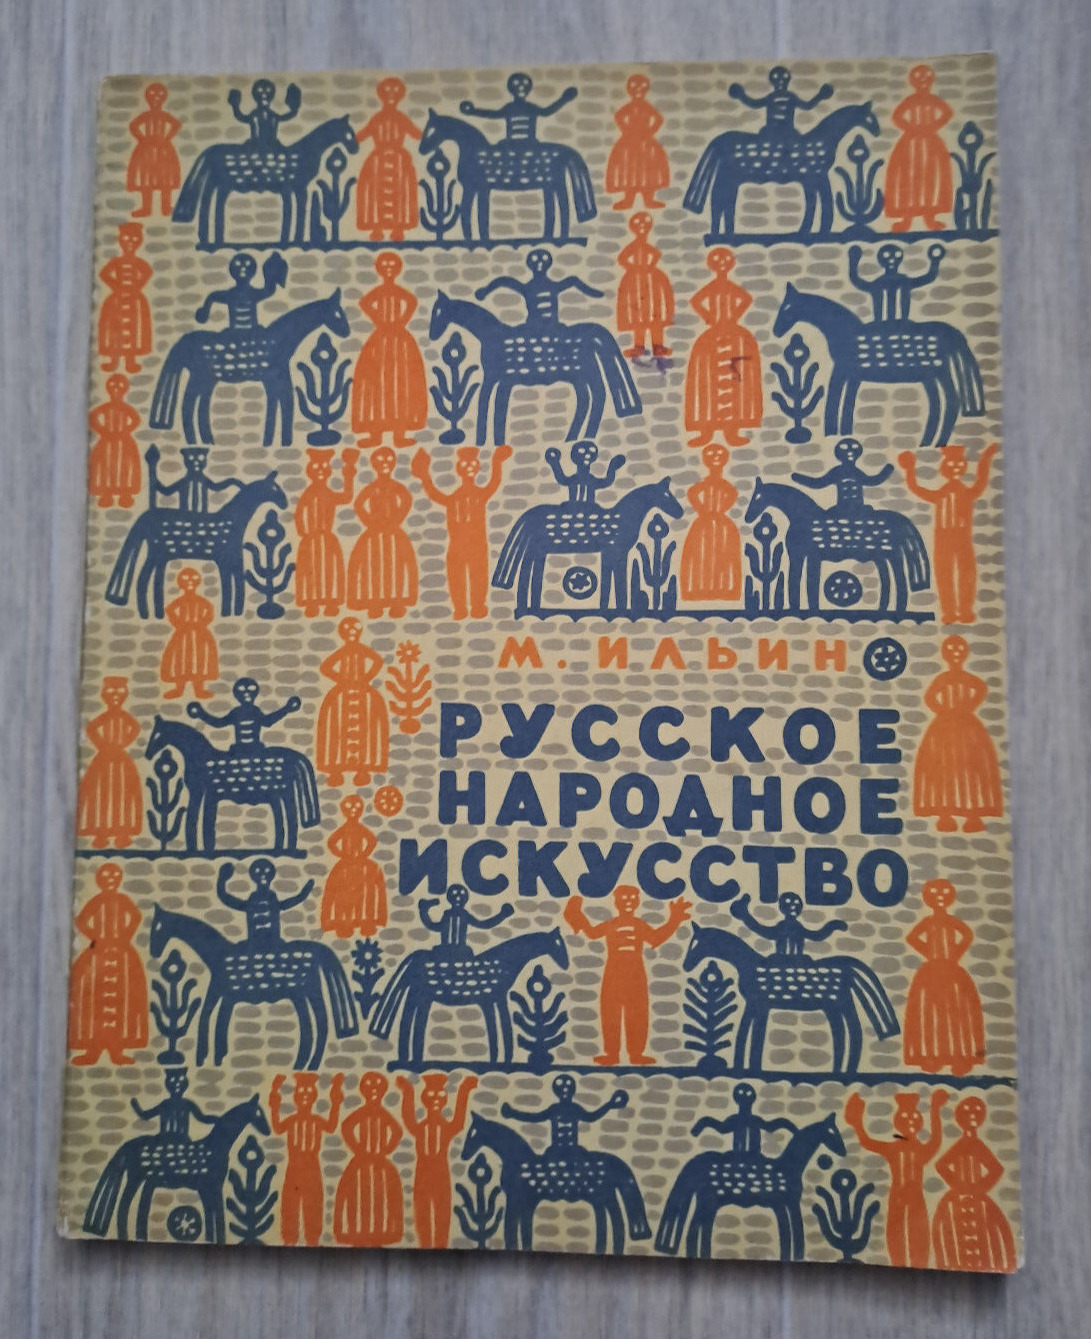 1959 Russian folk art Wood carving Carpets Khokhloma Embroidery Weaving book